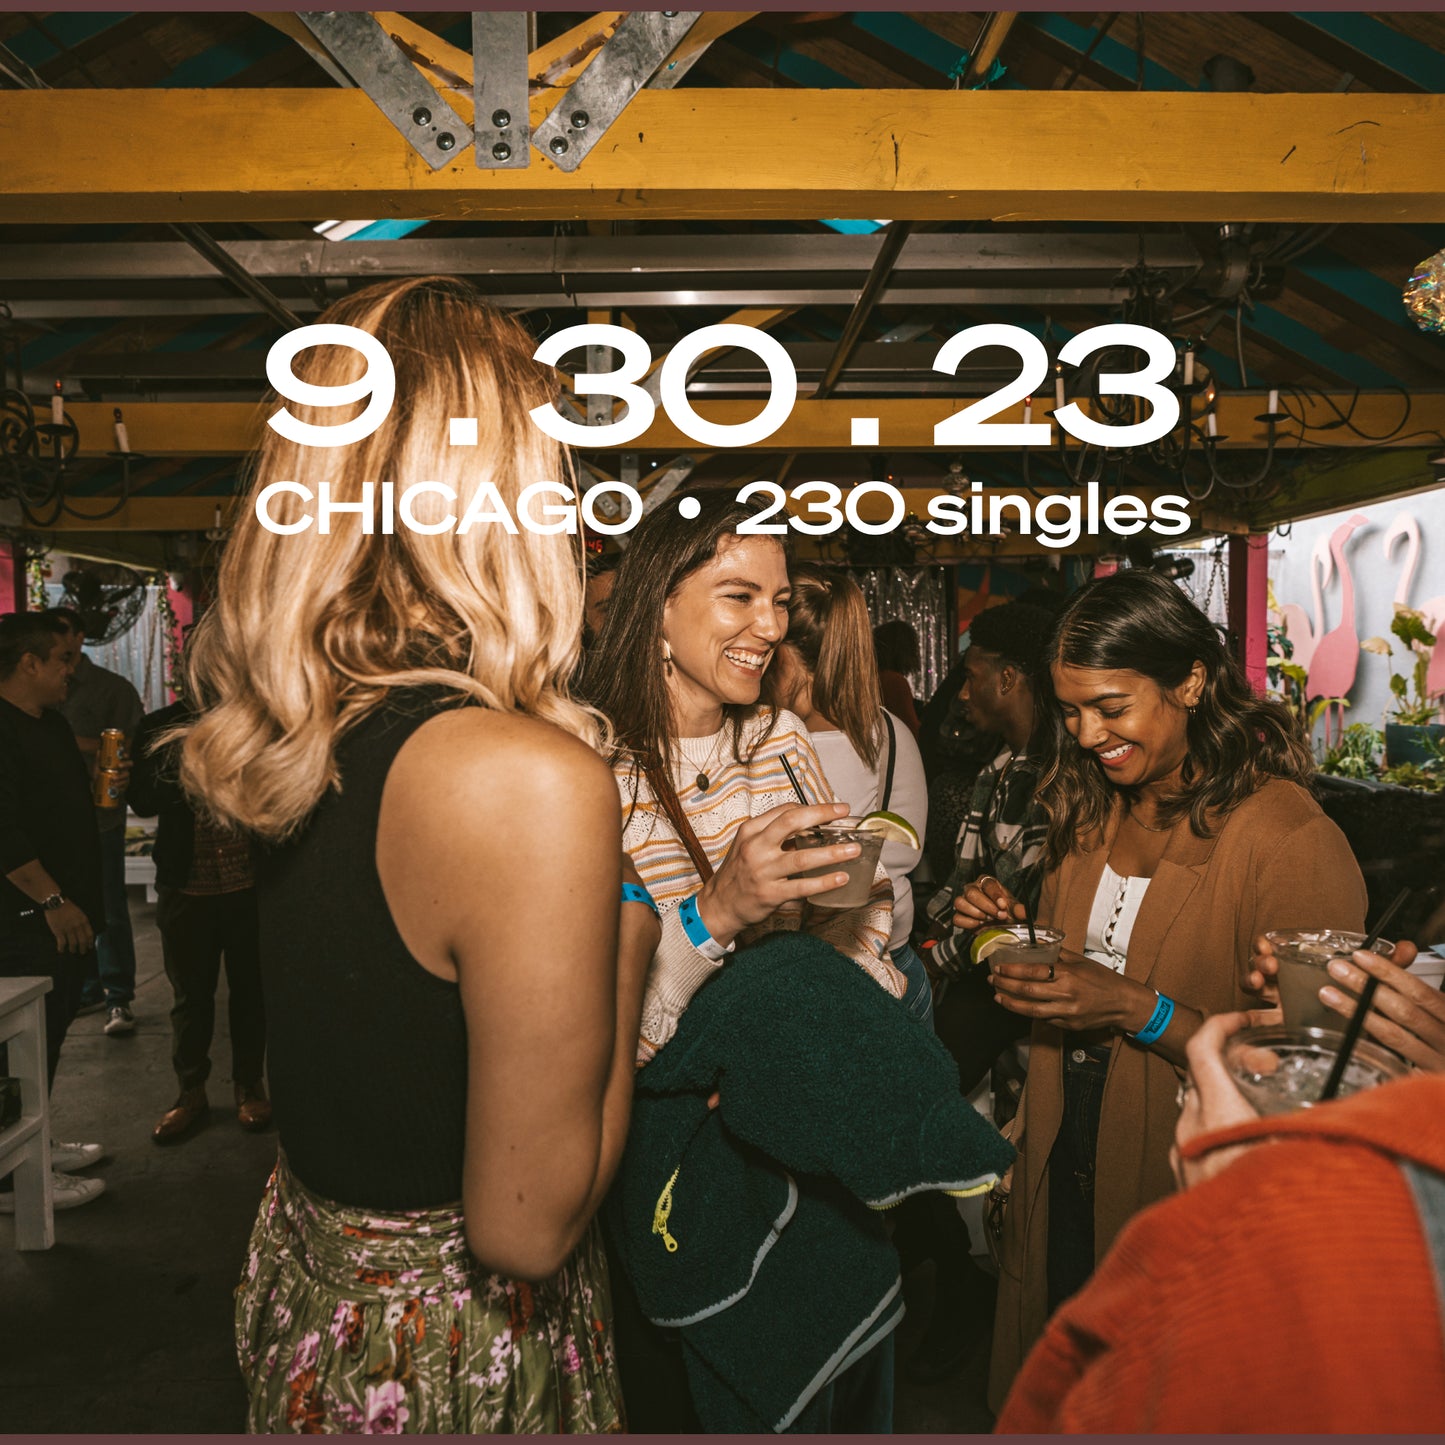 Chicago: Singles Happy Hour